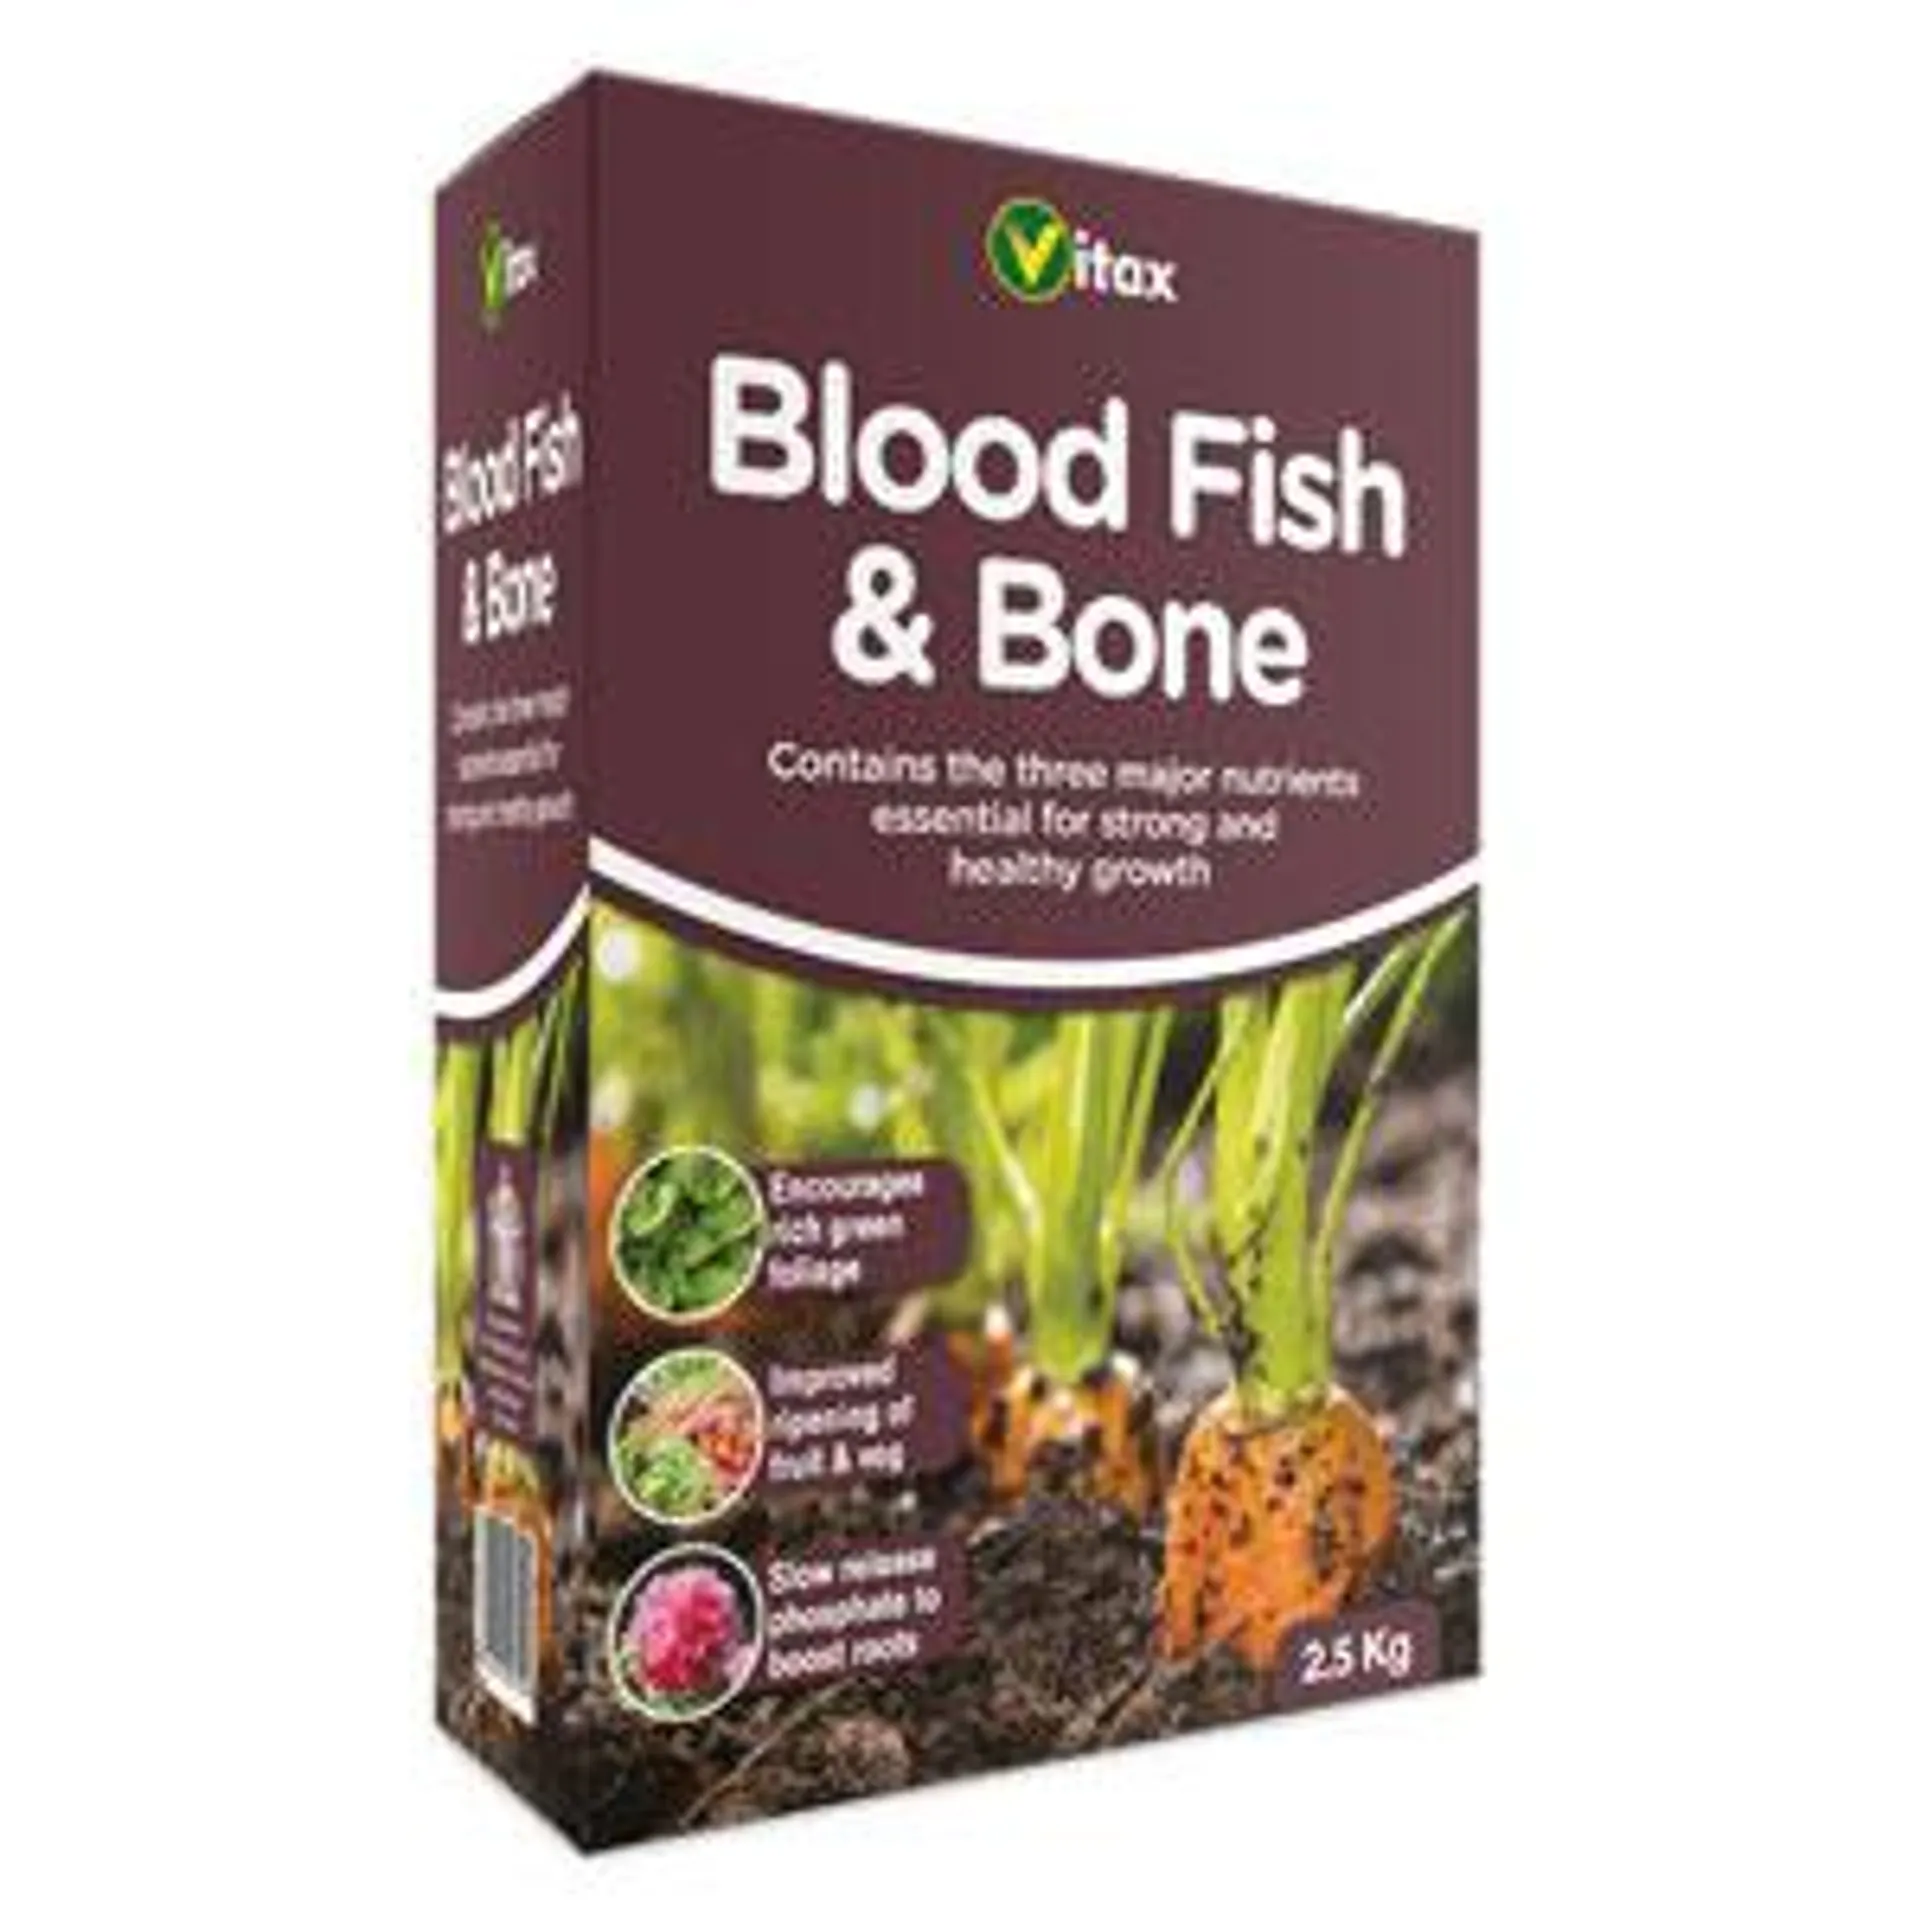 Vitax Blood Fish and Bone Organic Fertiliser